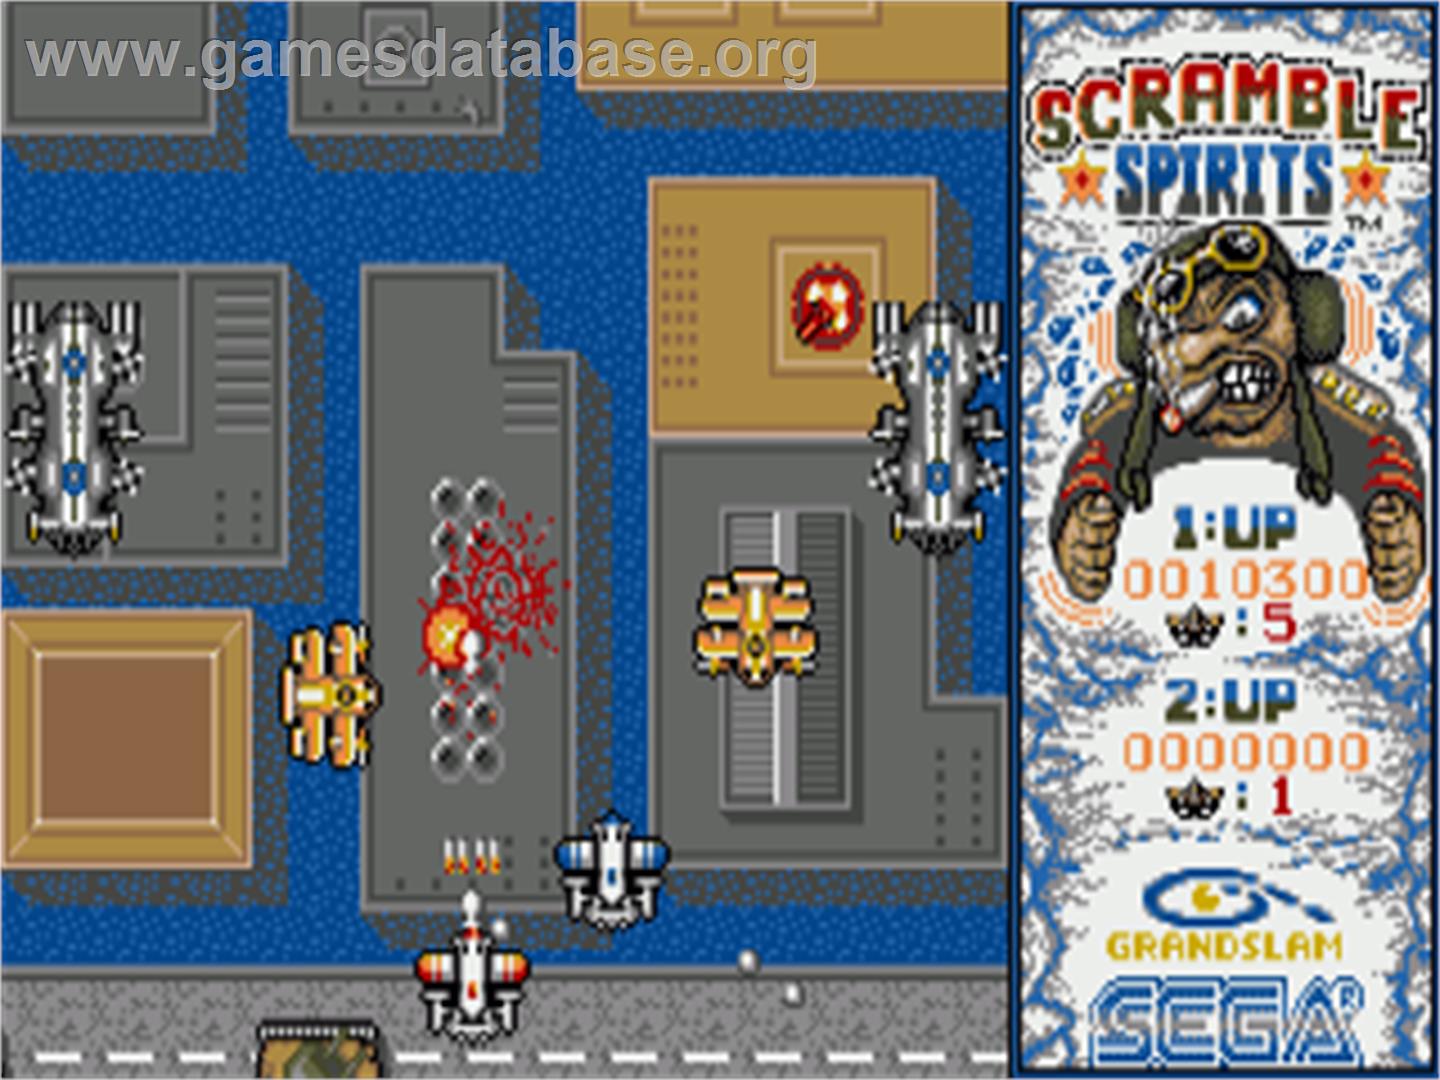 Scramble Spirits - Commodore Amiga - Artwork - In Game